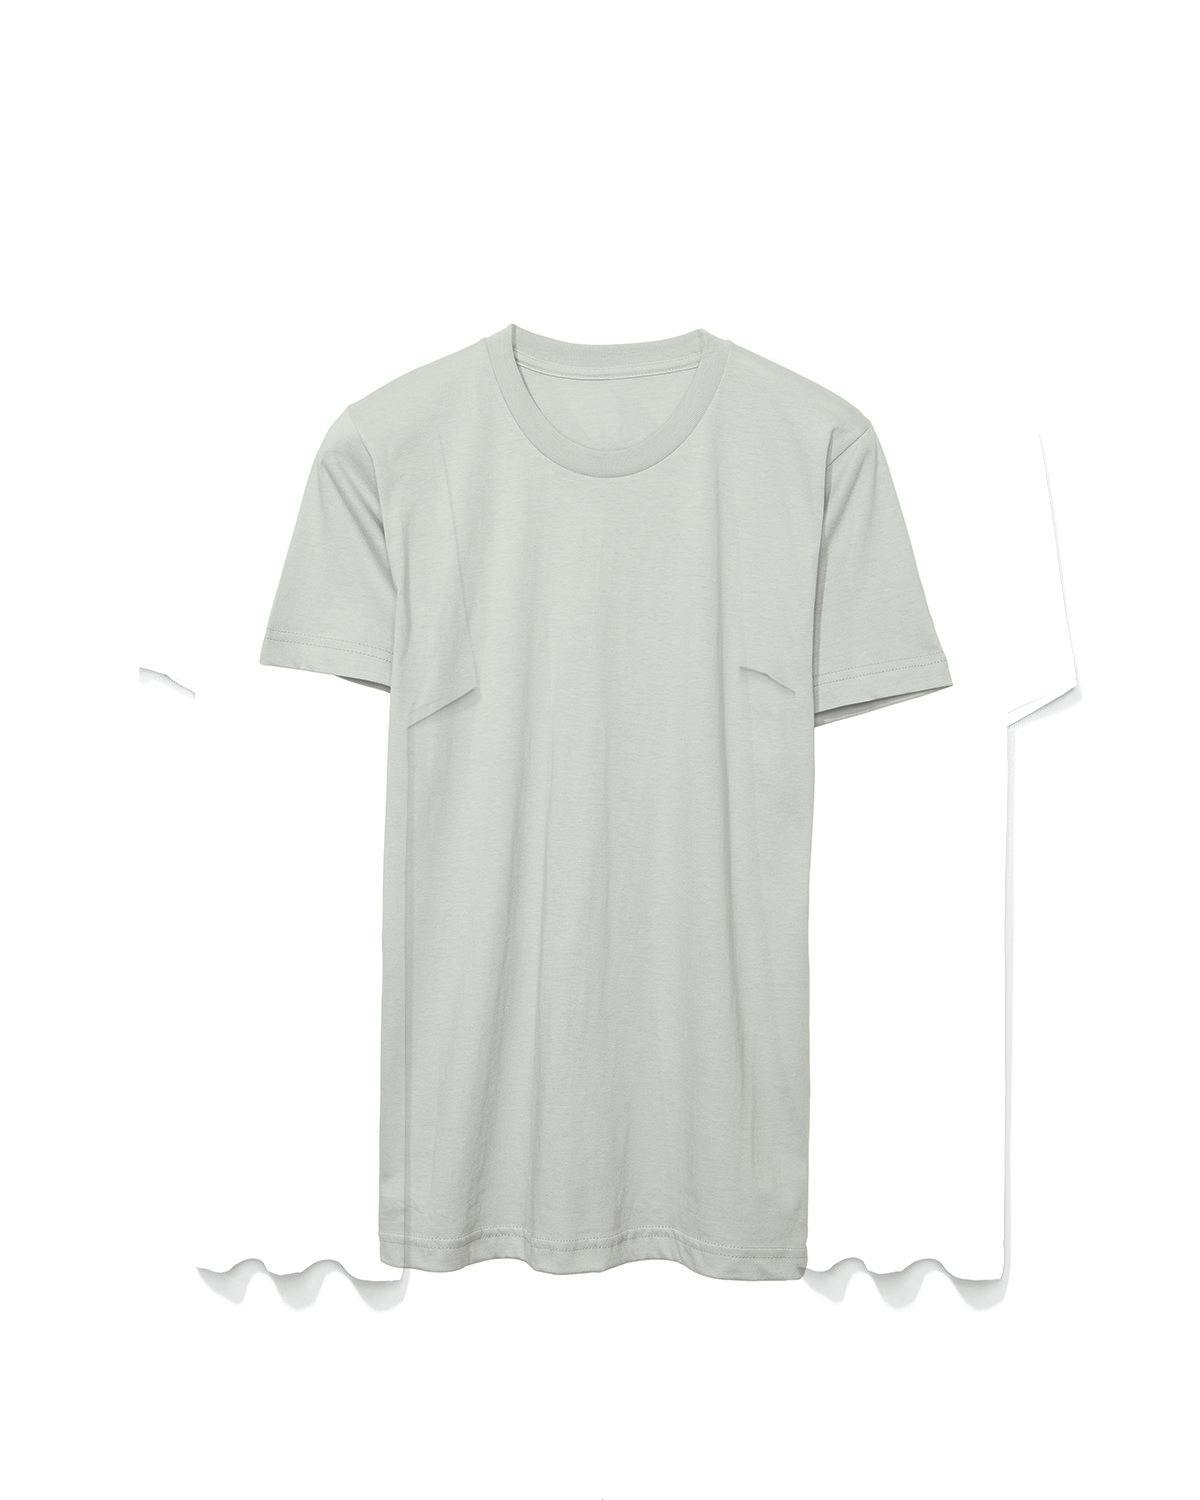 Image for Unisex Fine Jersey Short-Sleeve T-Shirt